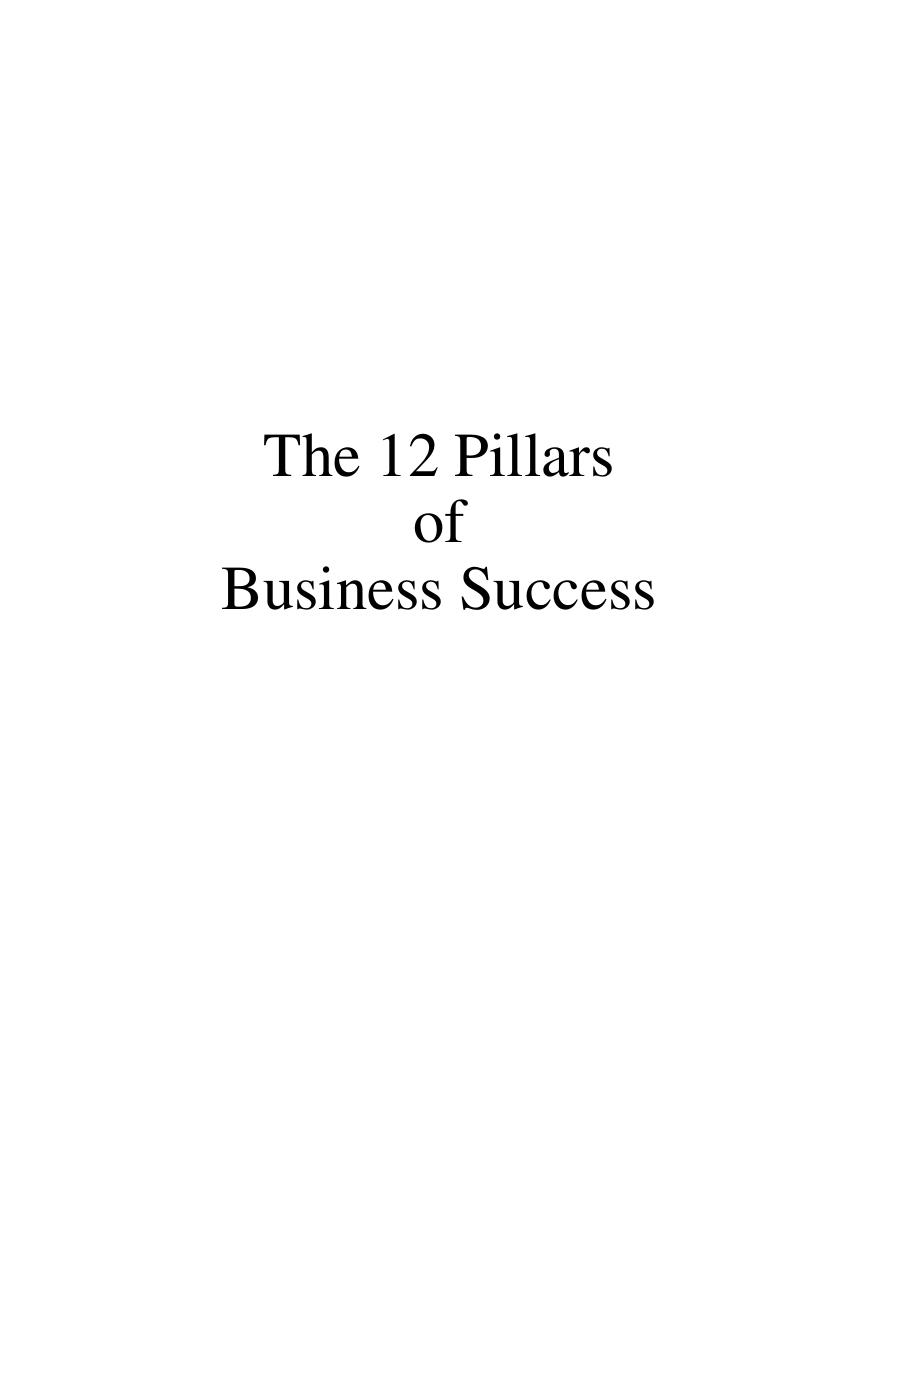 The 12 Pillars of Business Success